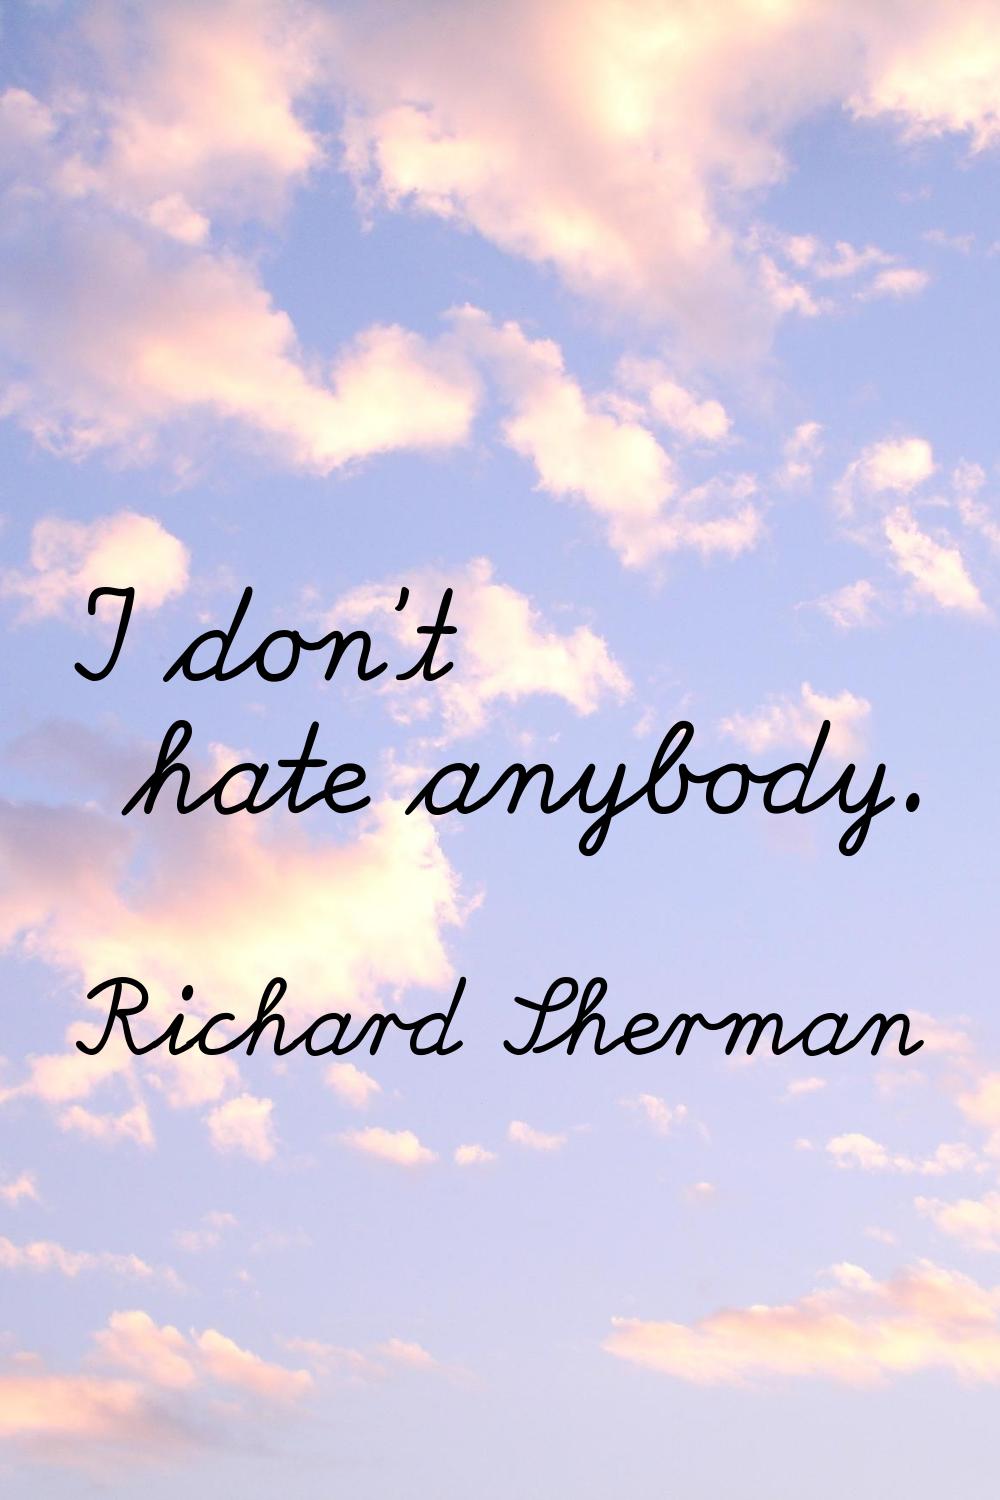 I don't hate anybody.